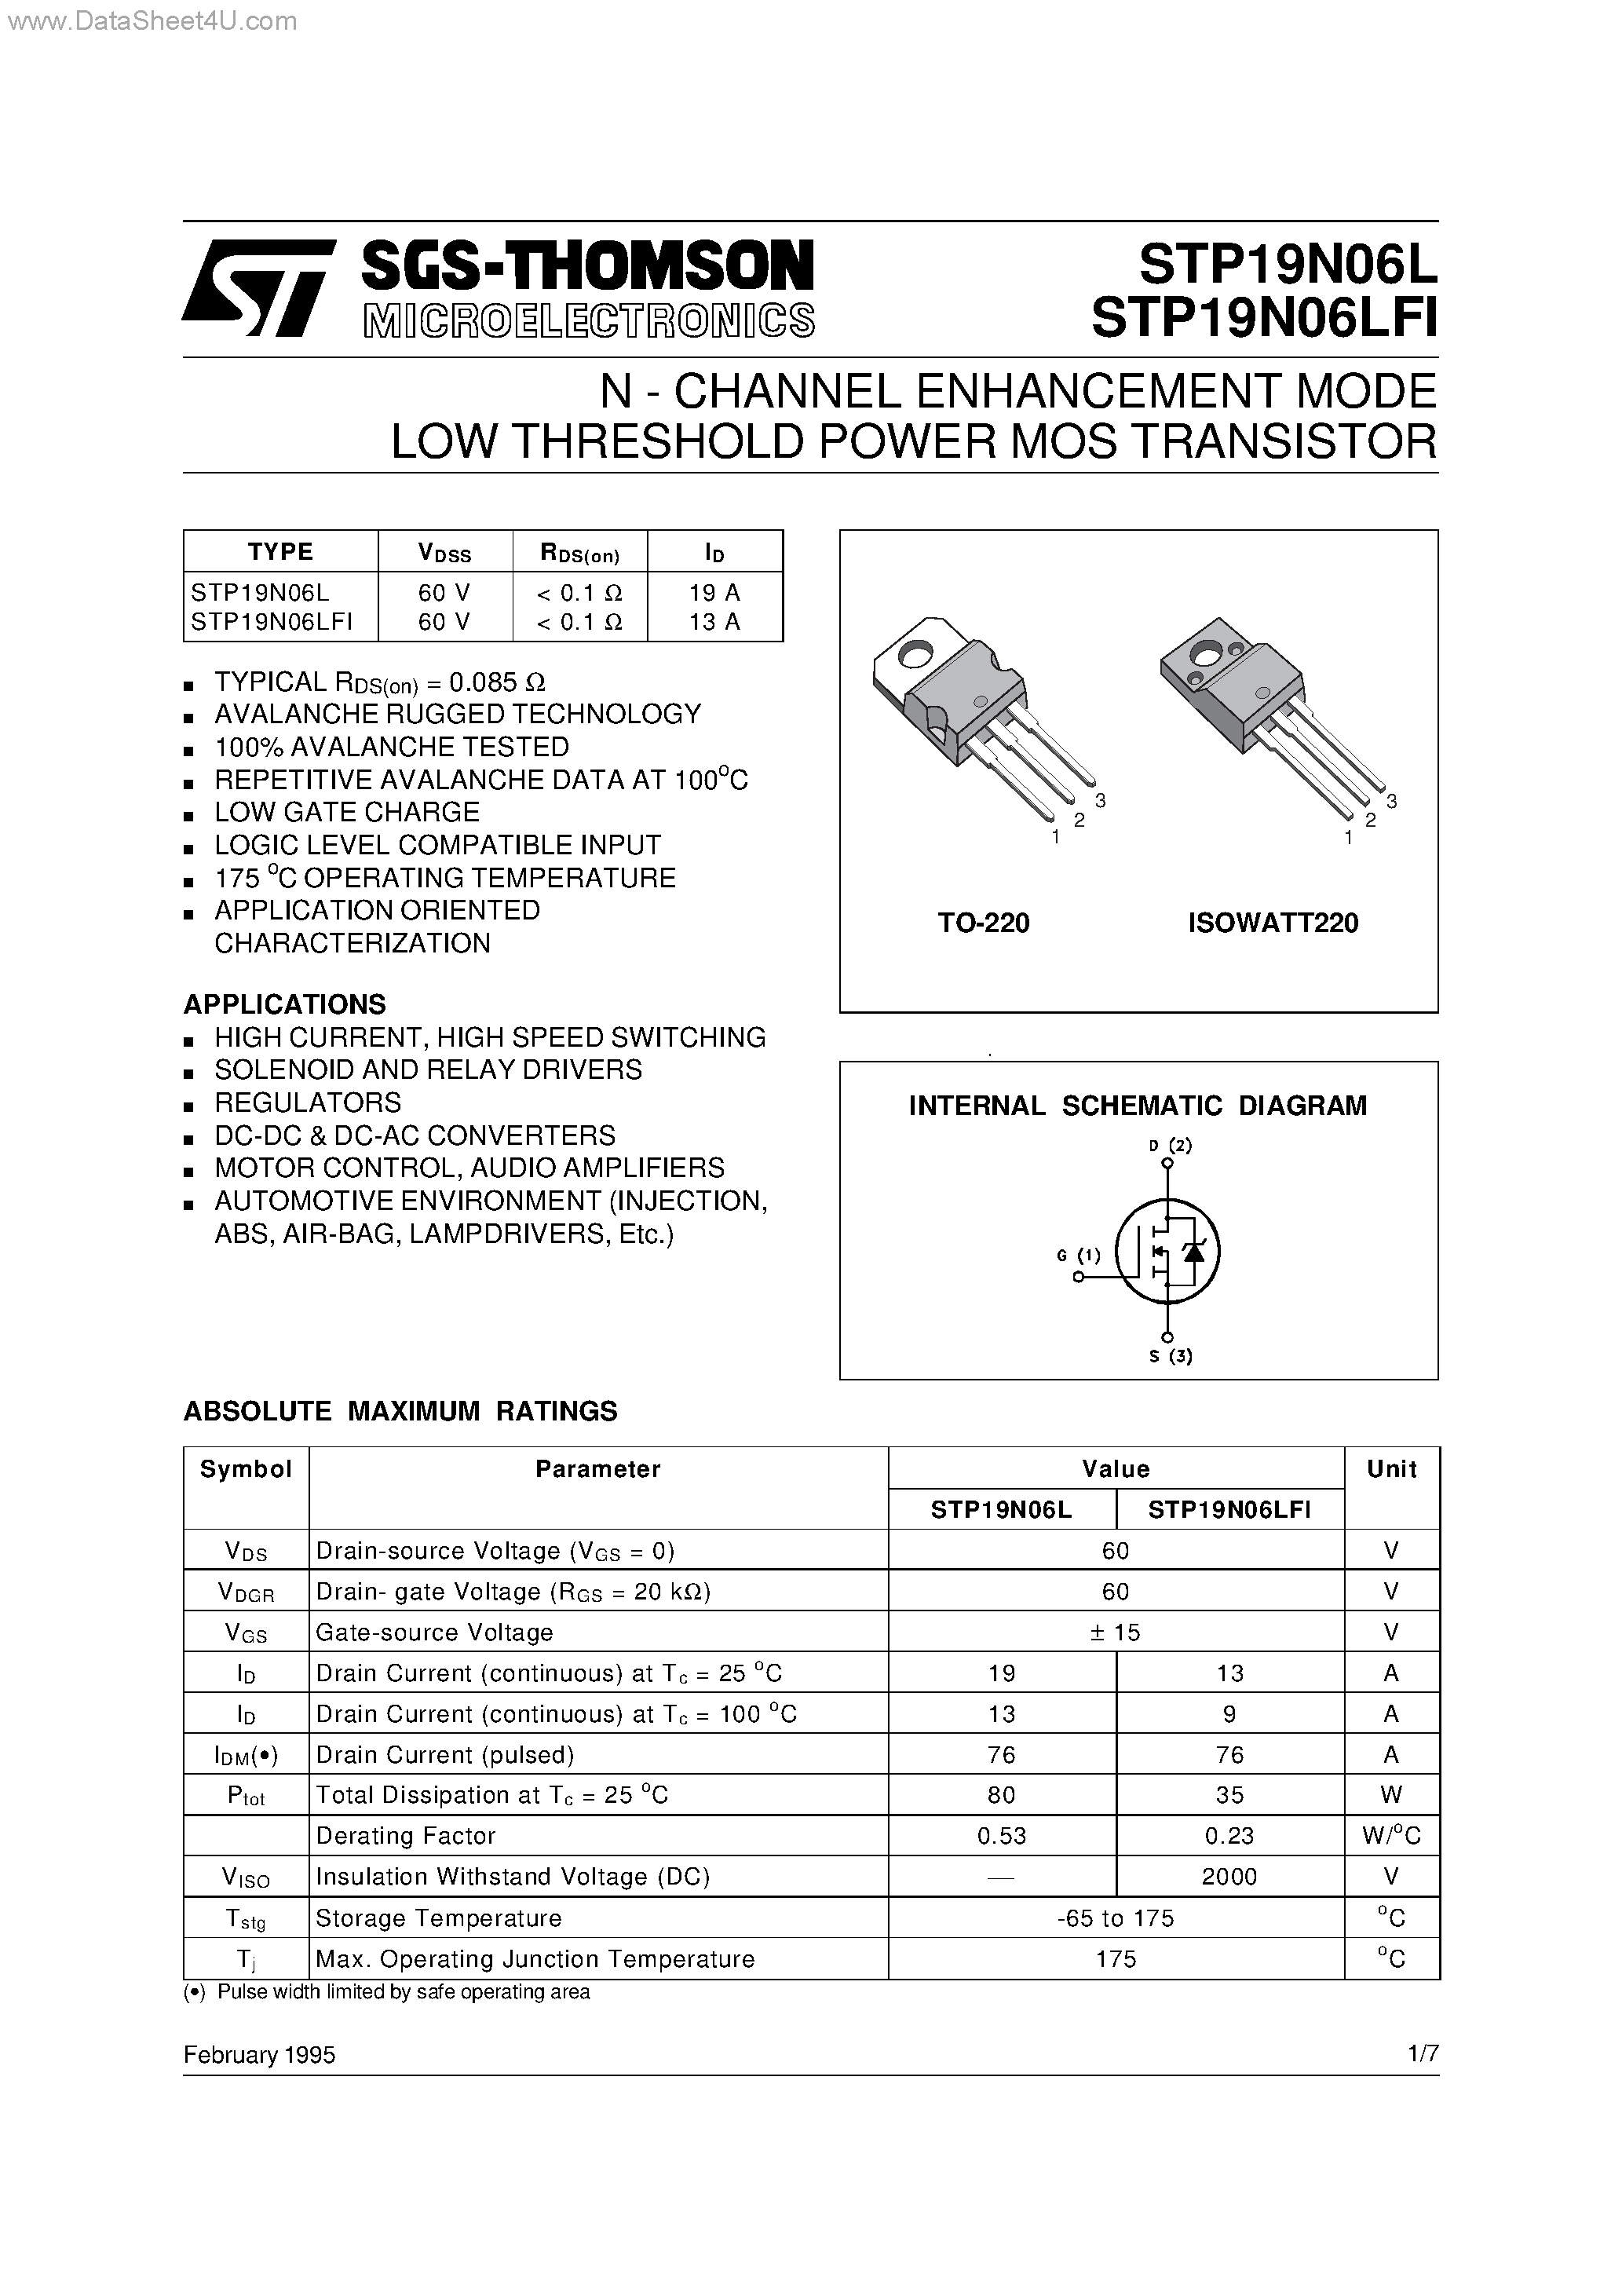 Datasheet STP19N06L - N-CHANNEL ENHANCEMENT MODE LOW THRESHOLD POWER MOS TRANSISTOR page 1